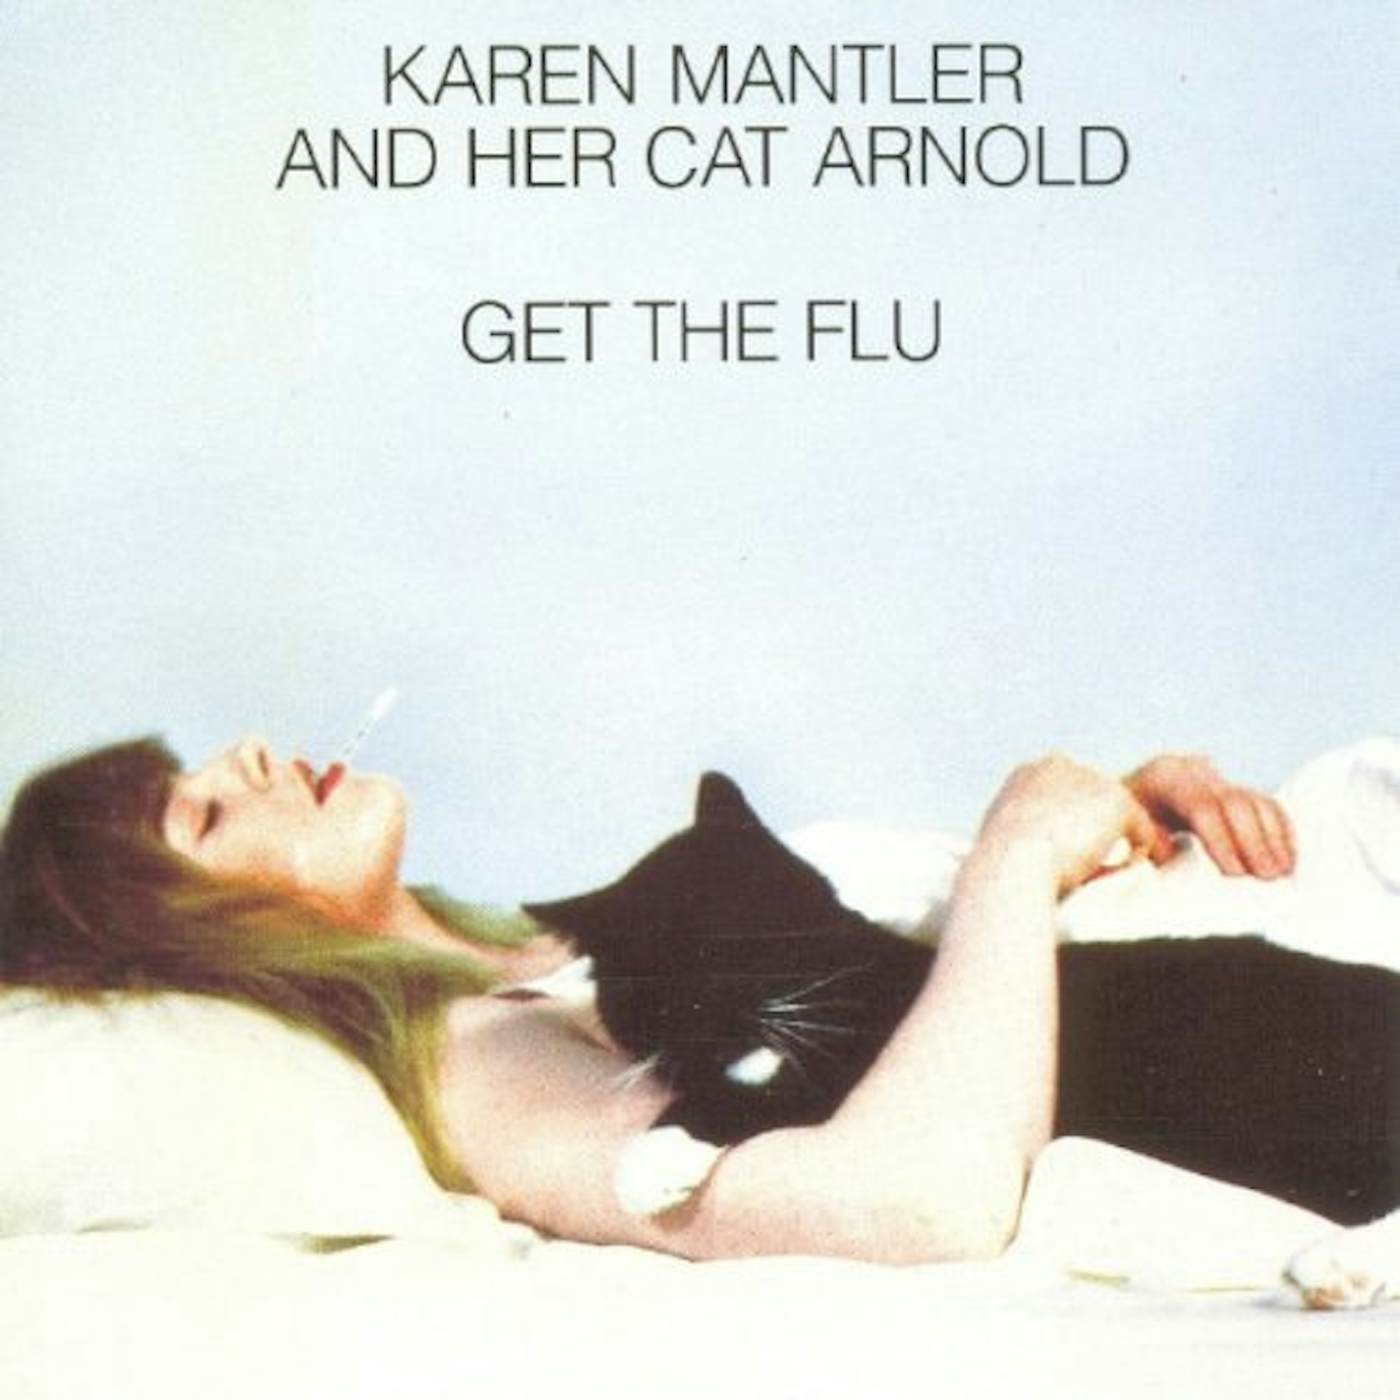 Karen Mantler AND HER CAT ARNOLD GET THE FLU CD